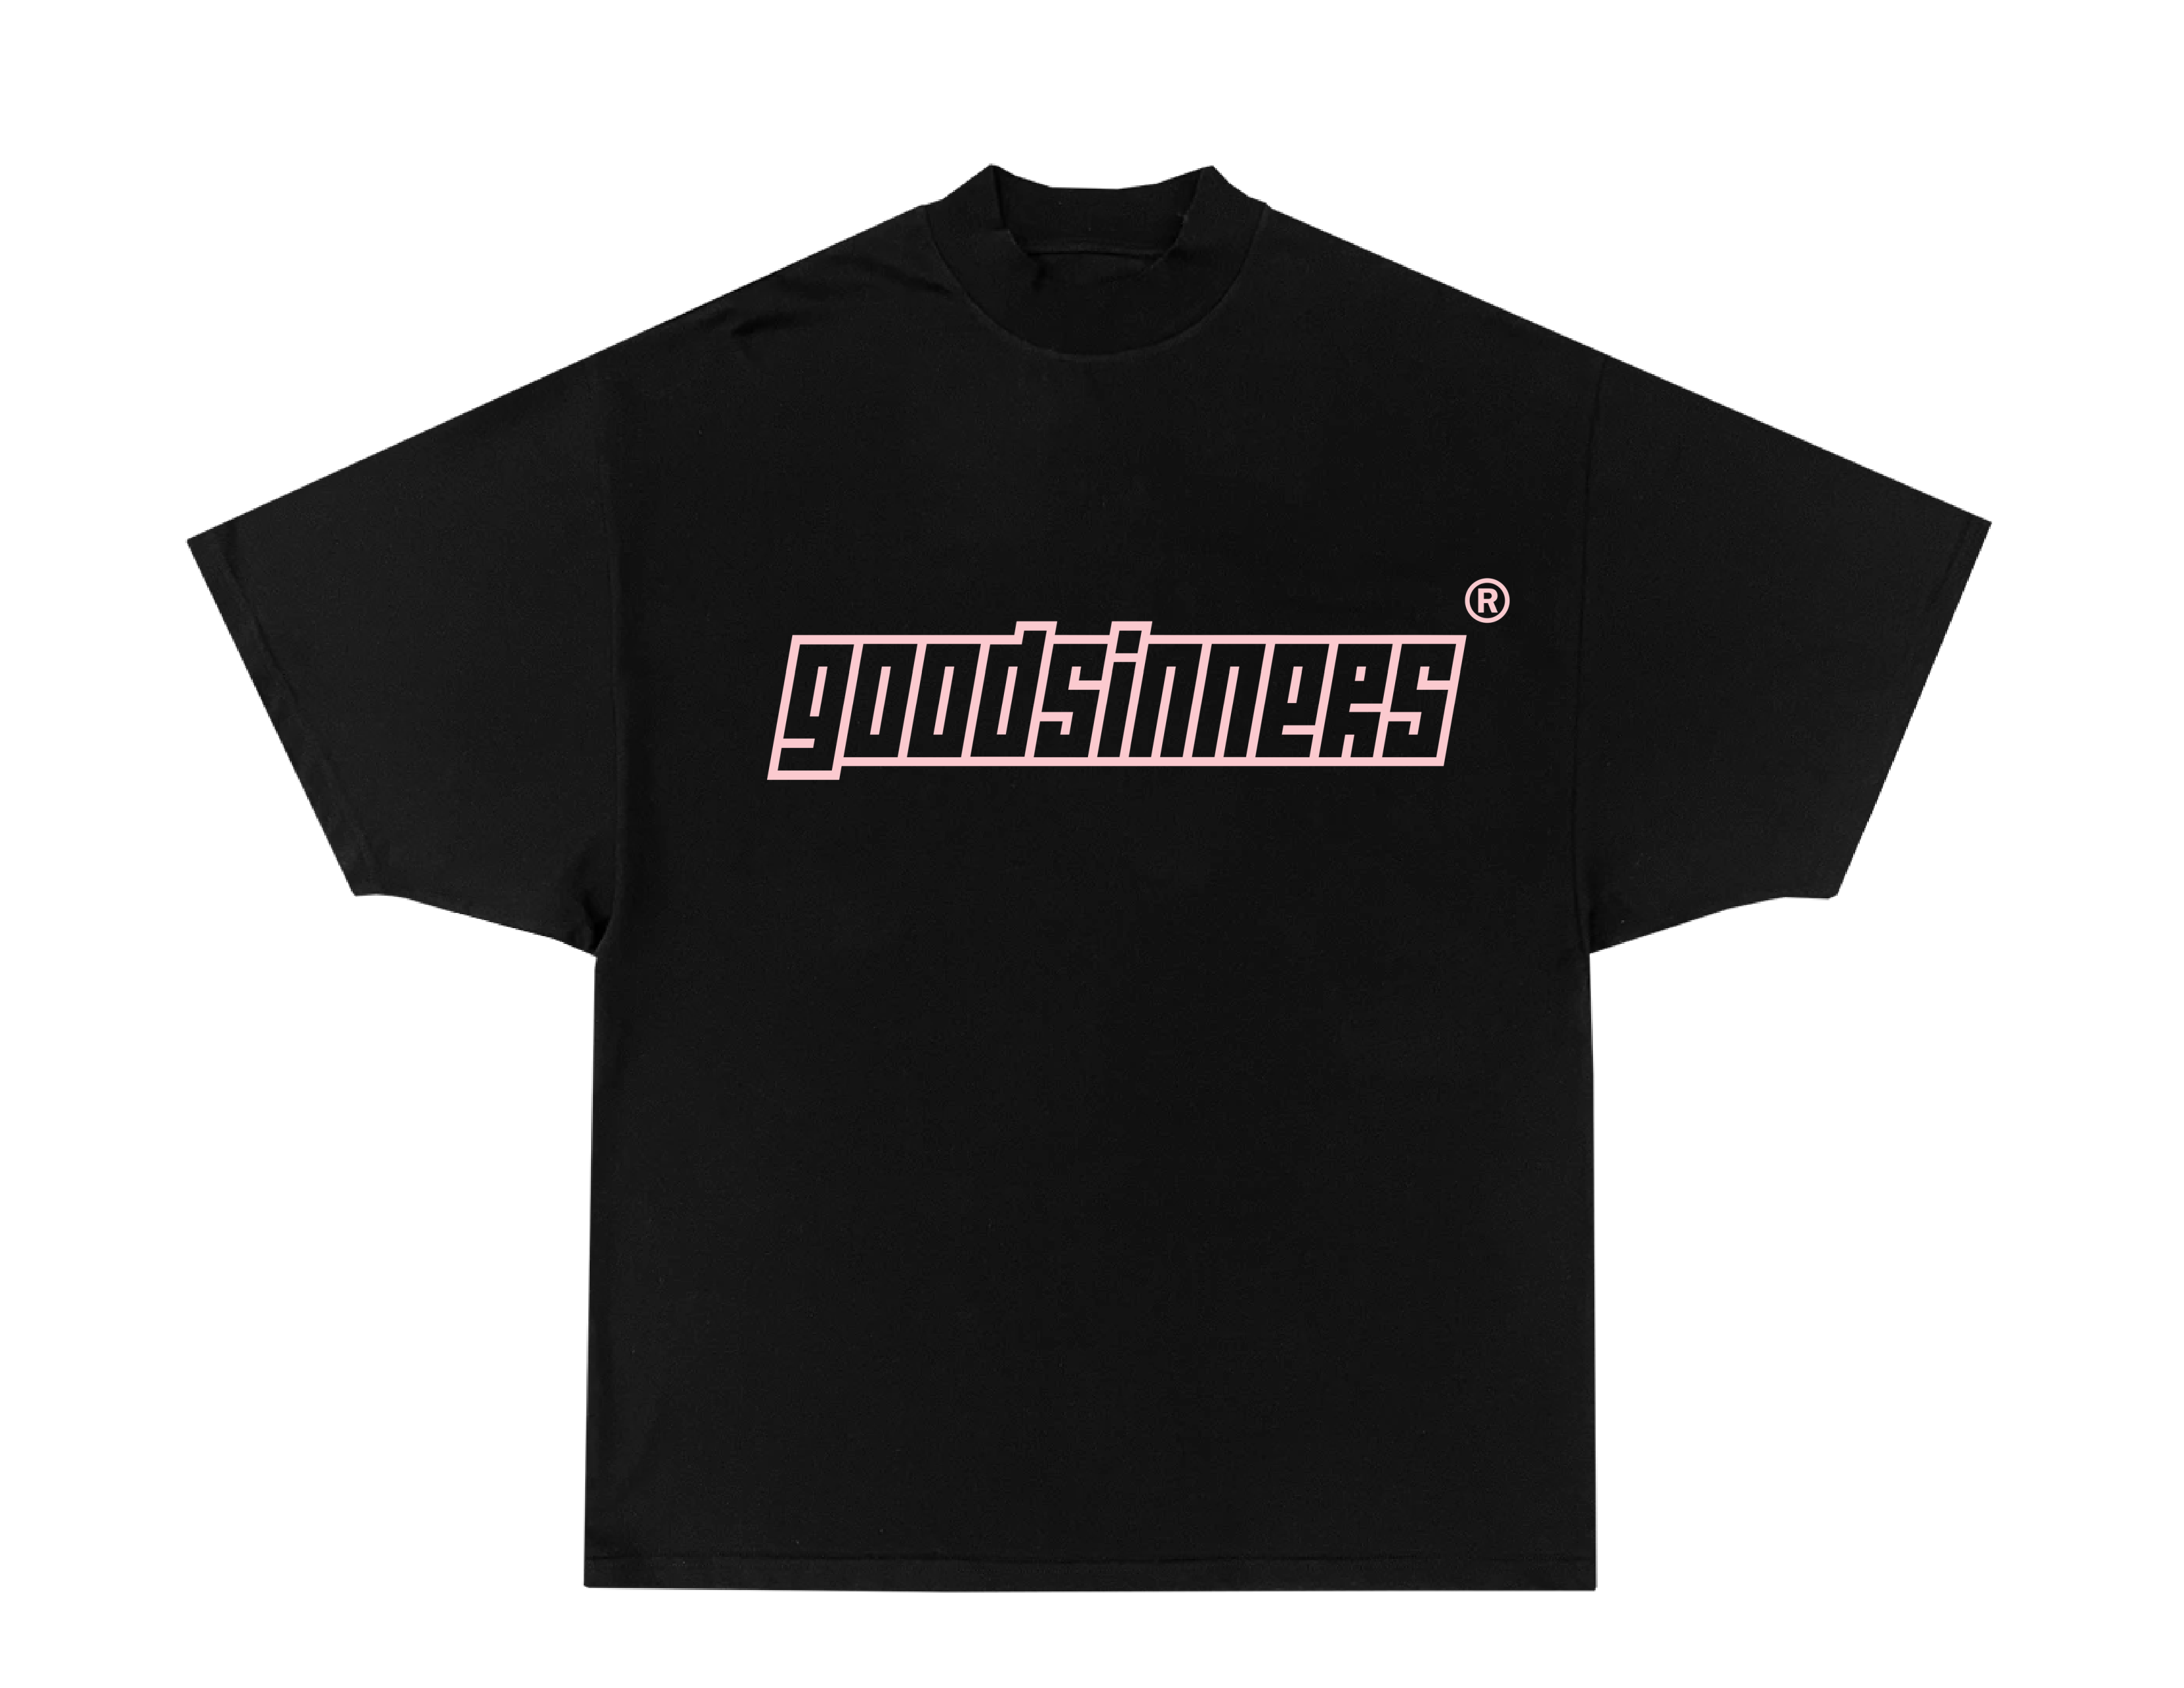 Goodsinners 2000 Logo Tee